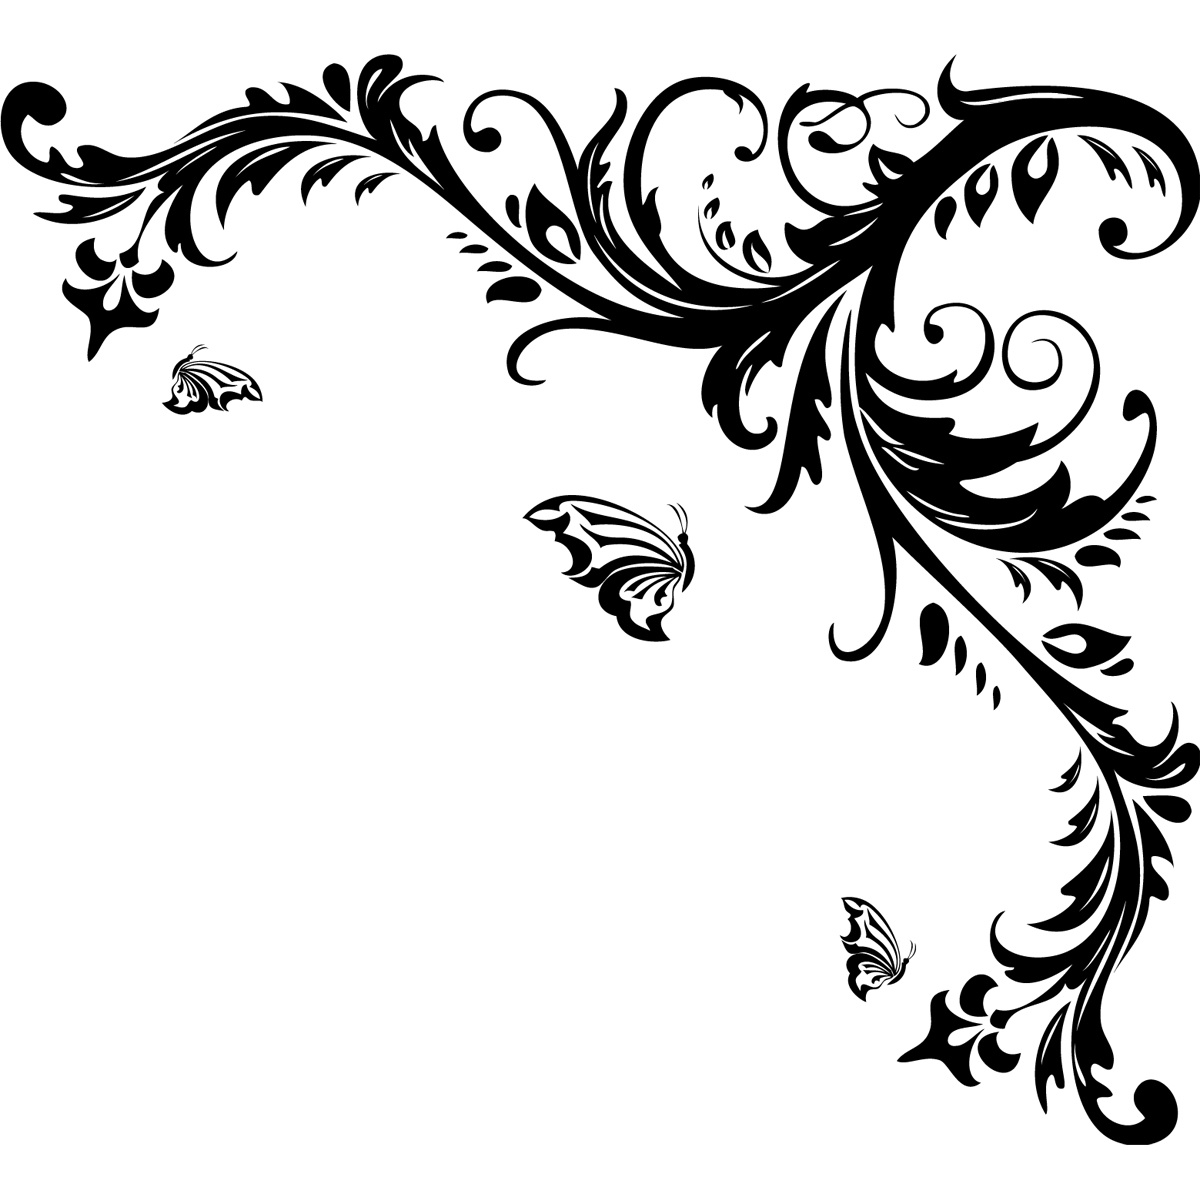 Stickers muraux design - Sticker mural Coin floral et papillons